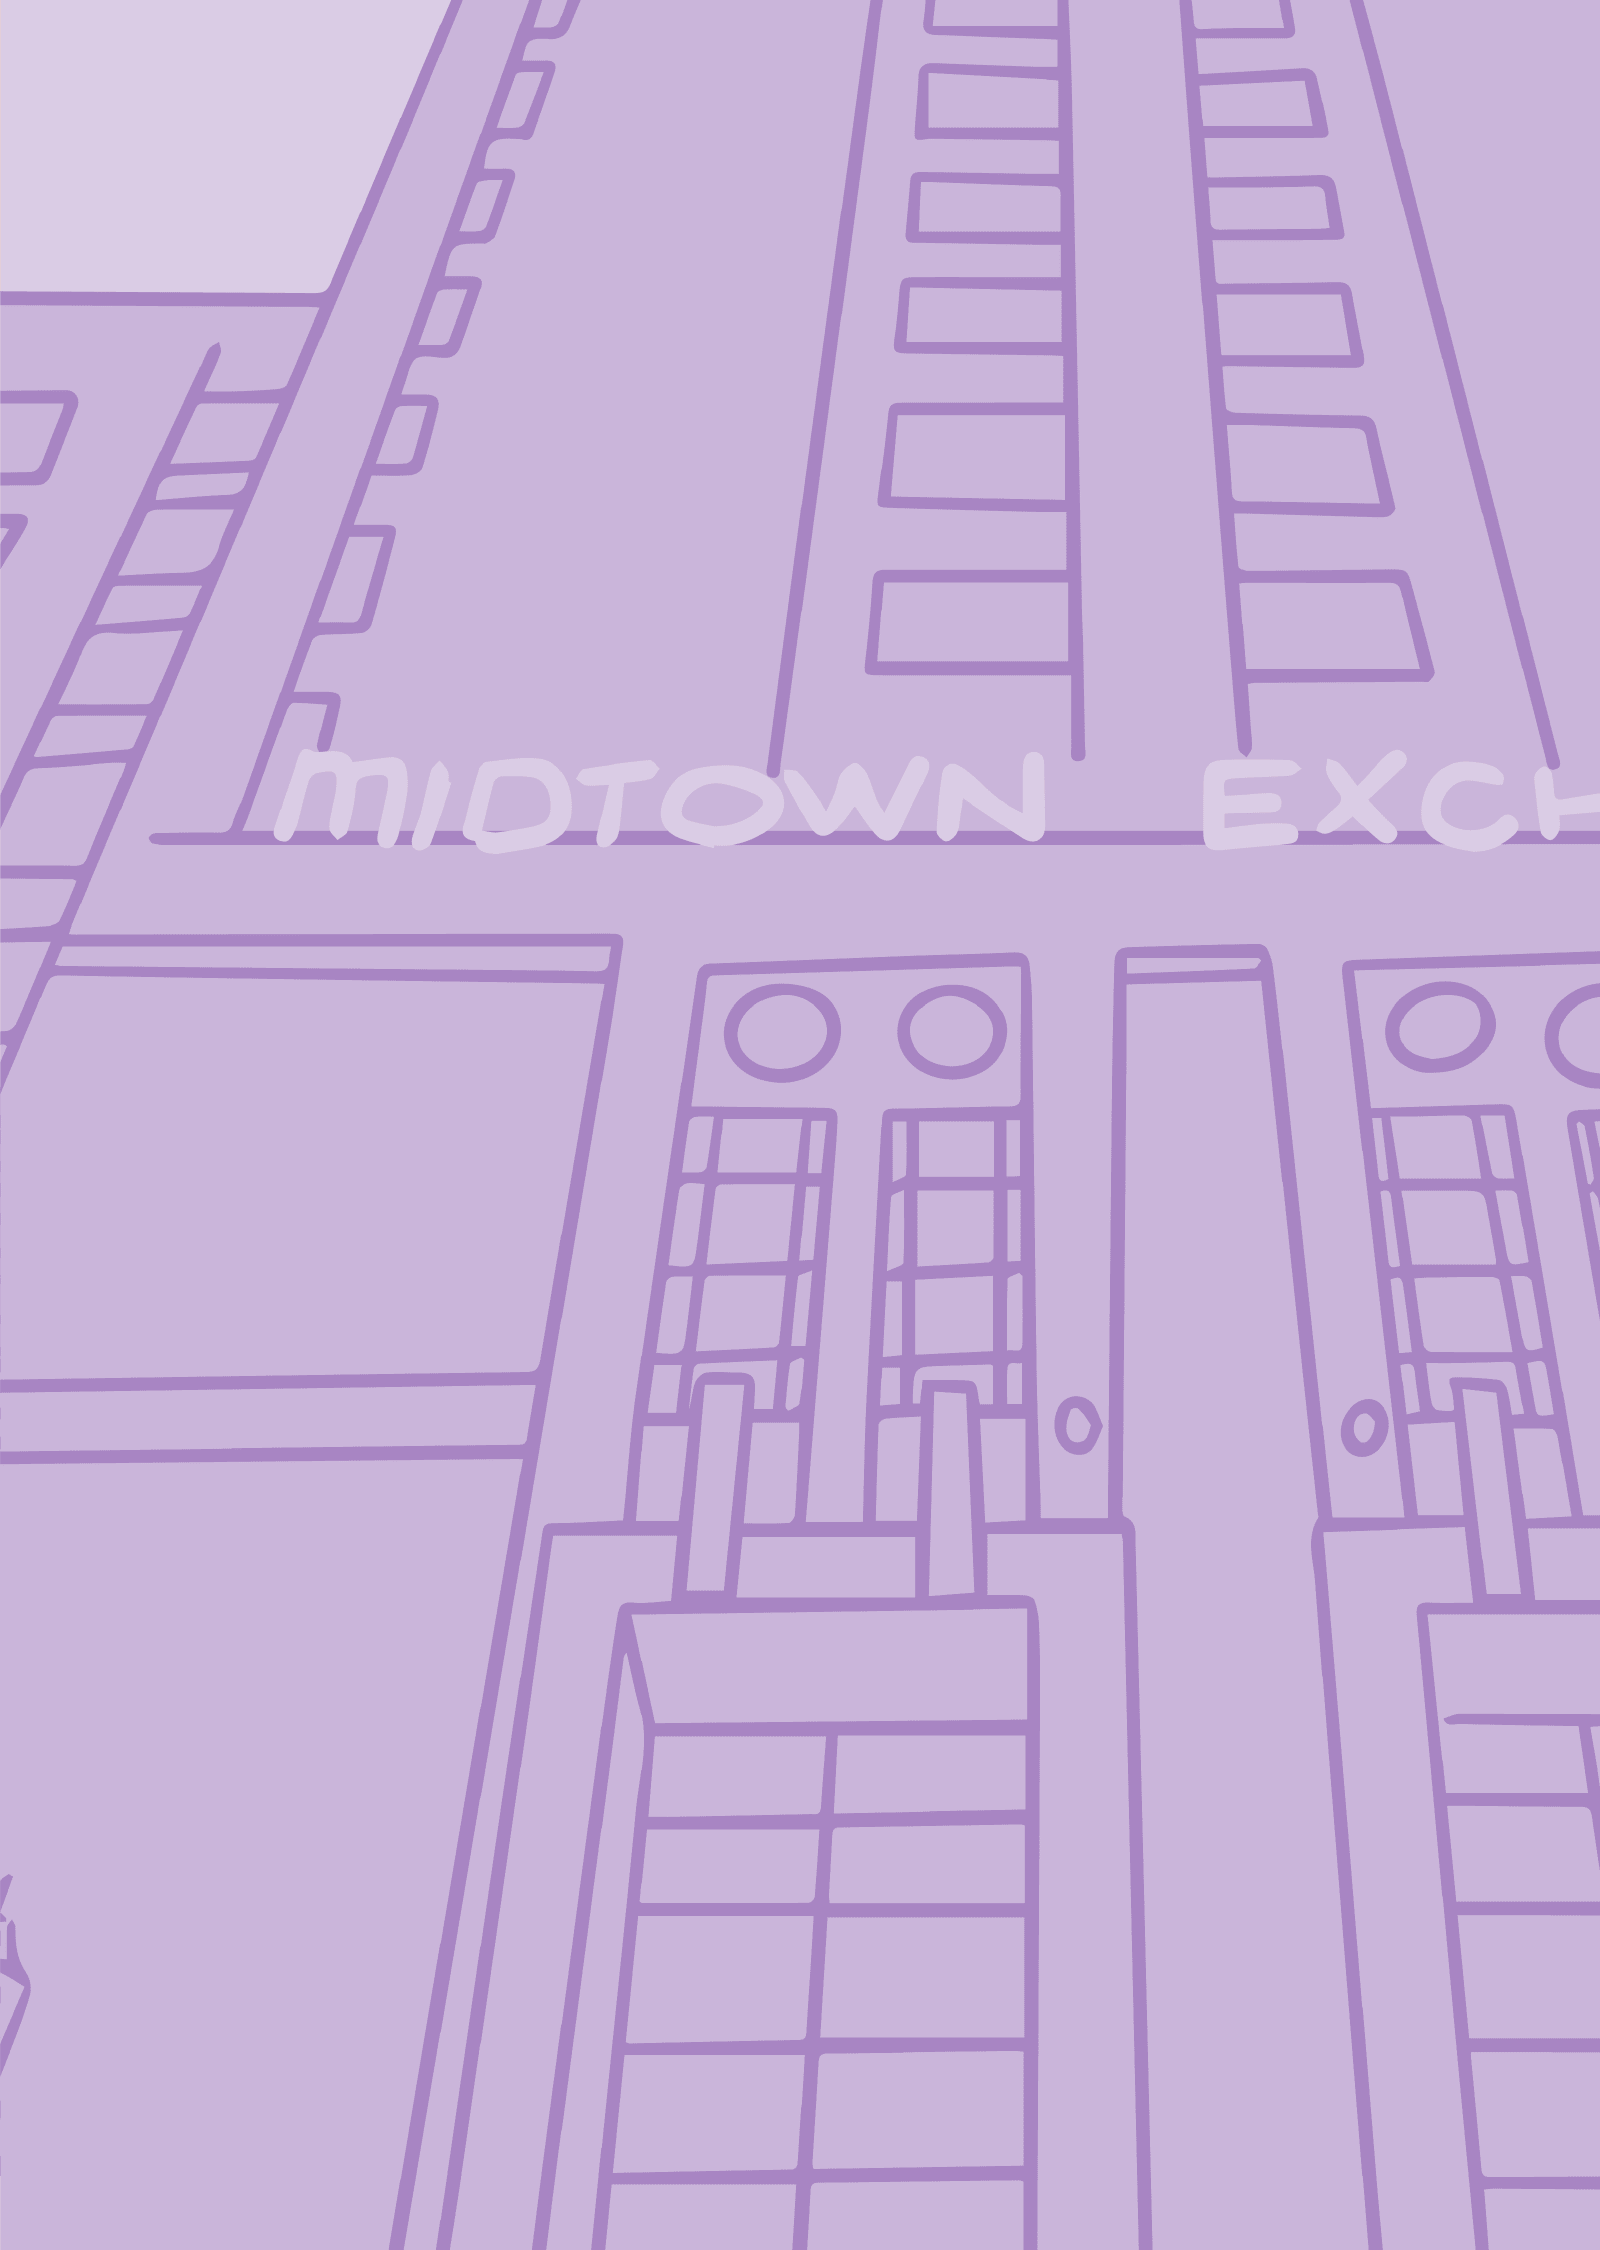 An illustration of midtown exchange in monochromatic purple